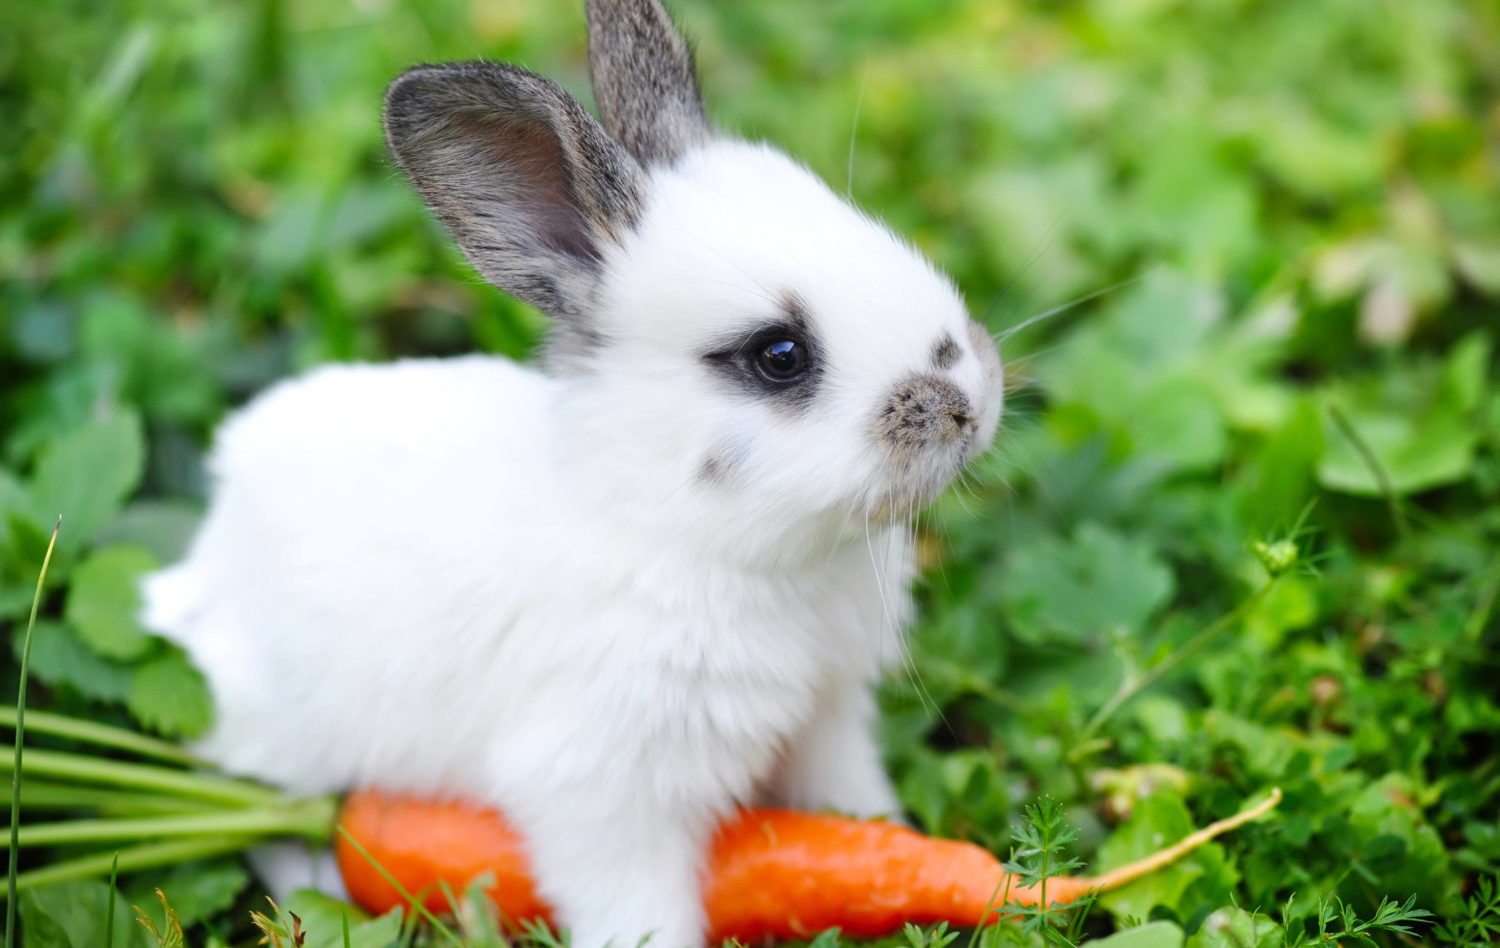 fluffy baby bunny